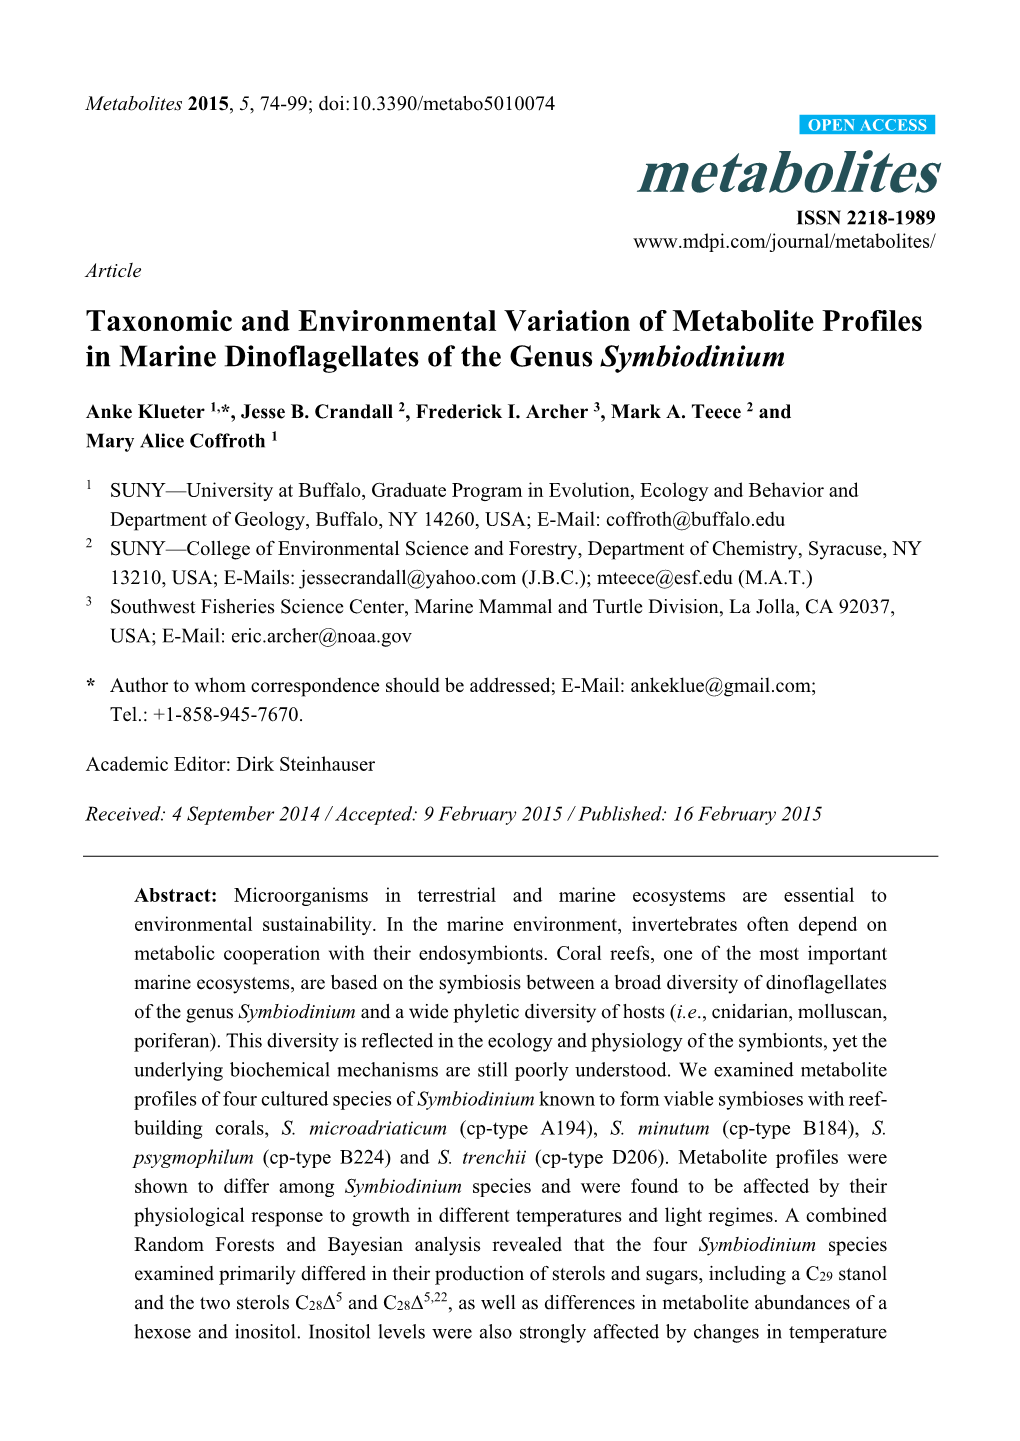 Taxonomic and Environmental Variation of Metabolite Profiles in Marine Dinoflagellates of the Genus Symbiodinium